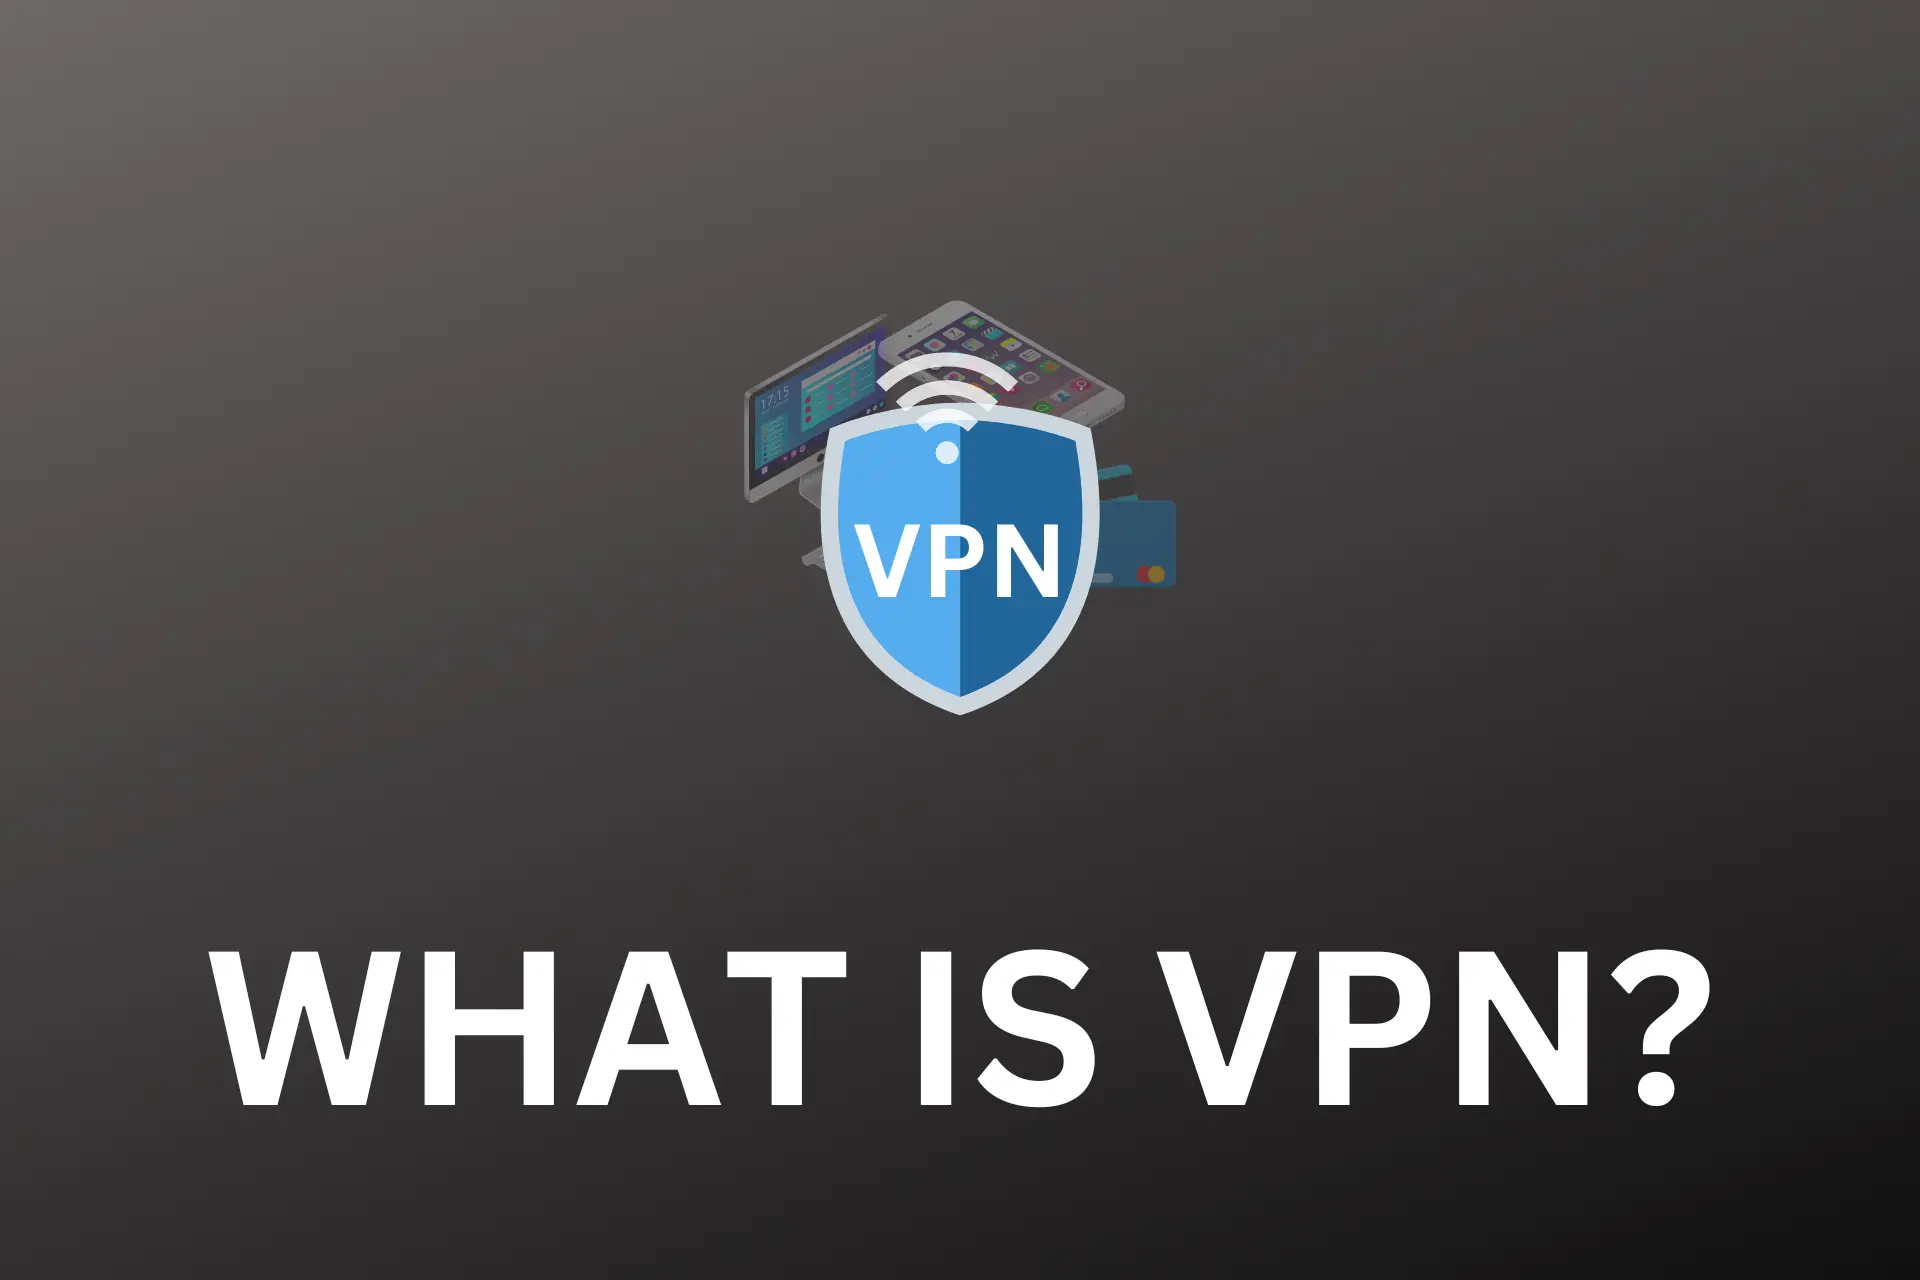 WHAT IS VPN